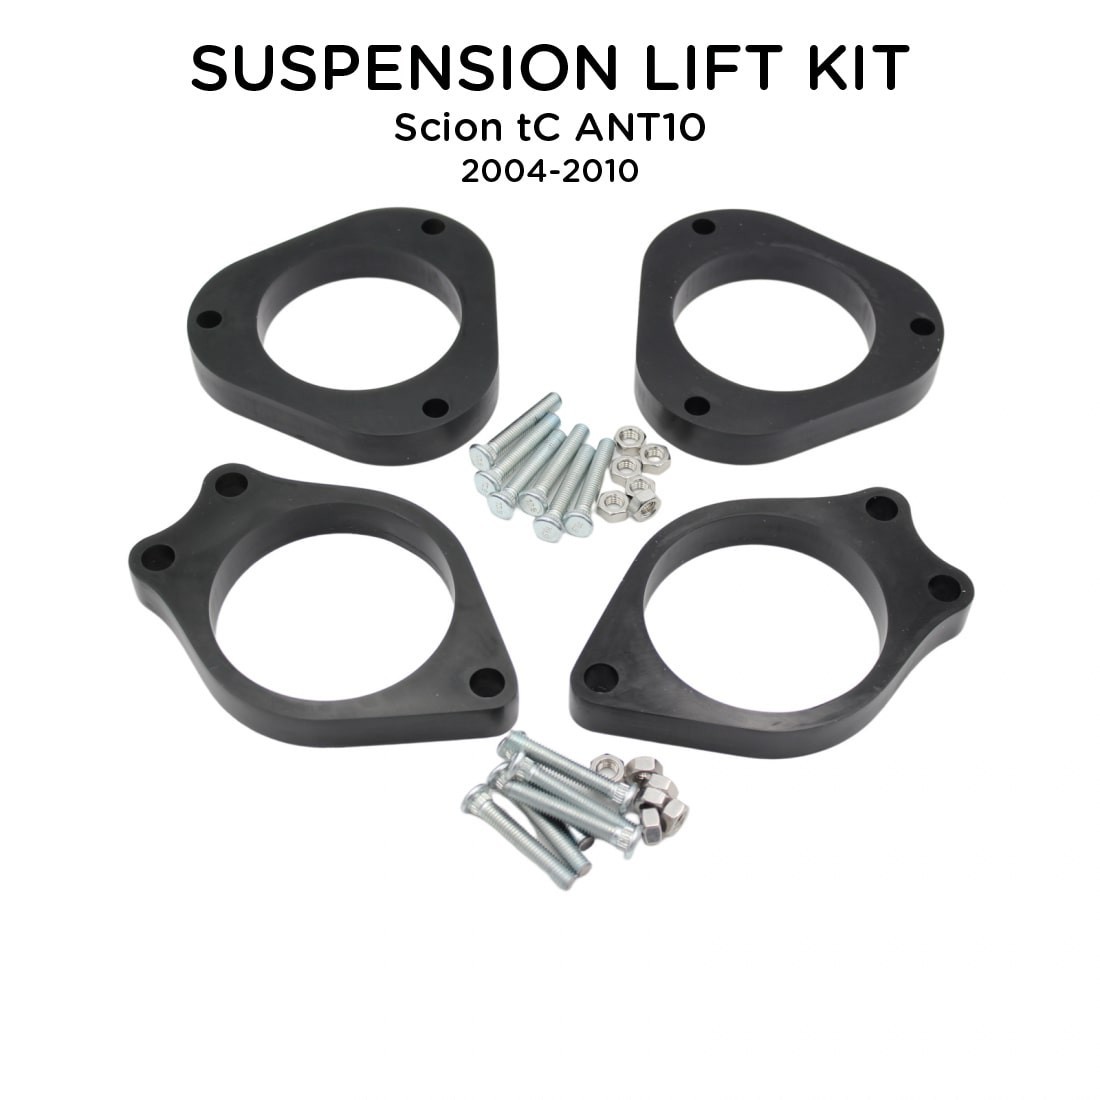 Suspension Lift Kit For Scion tC ANT10 2004-2010